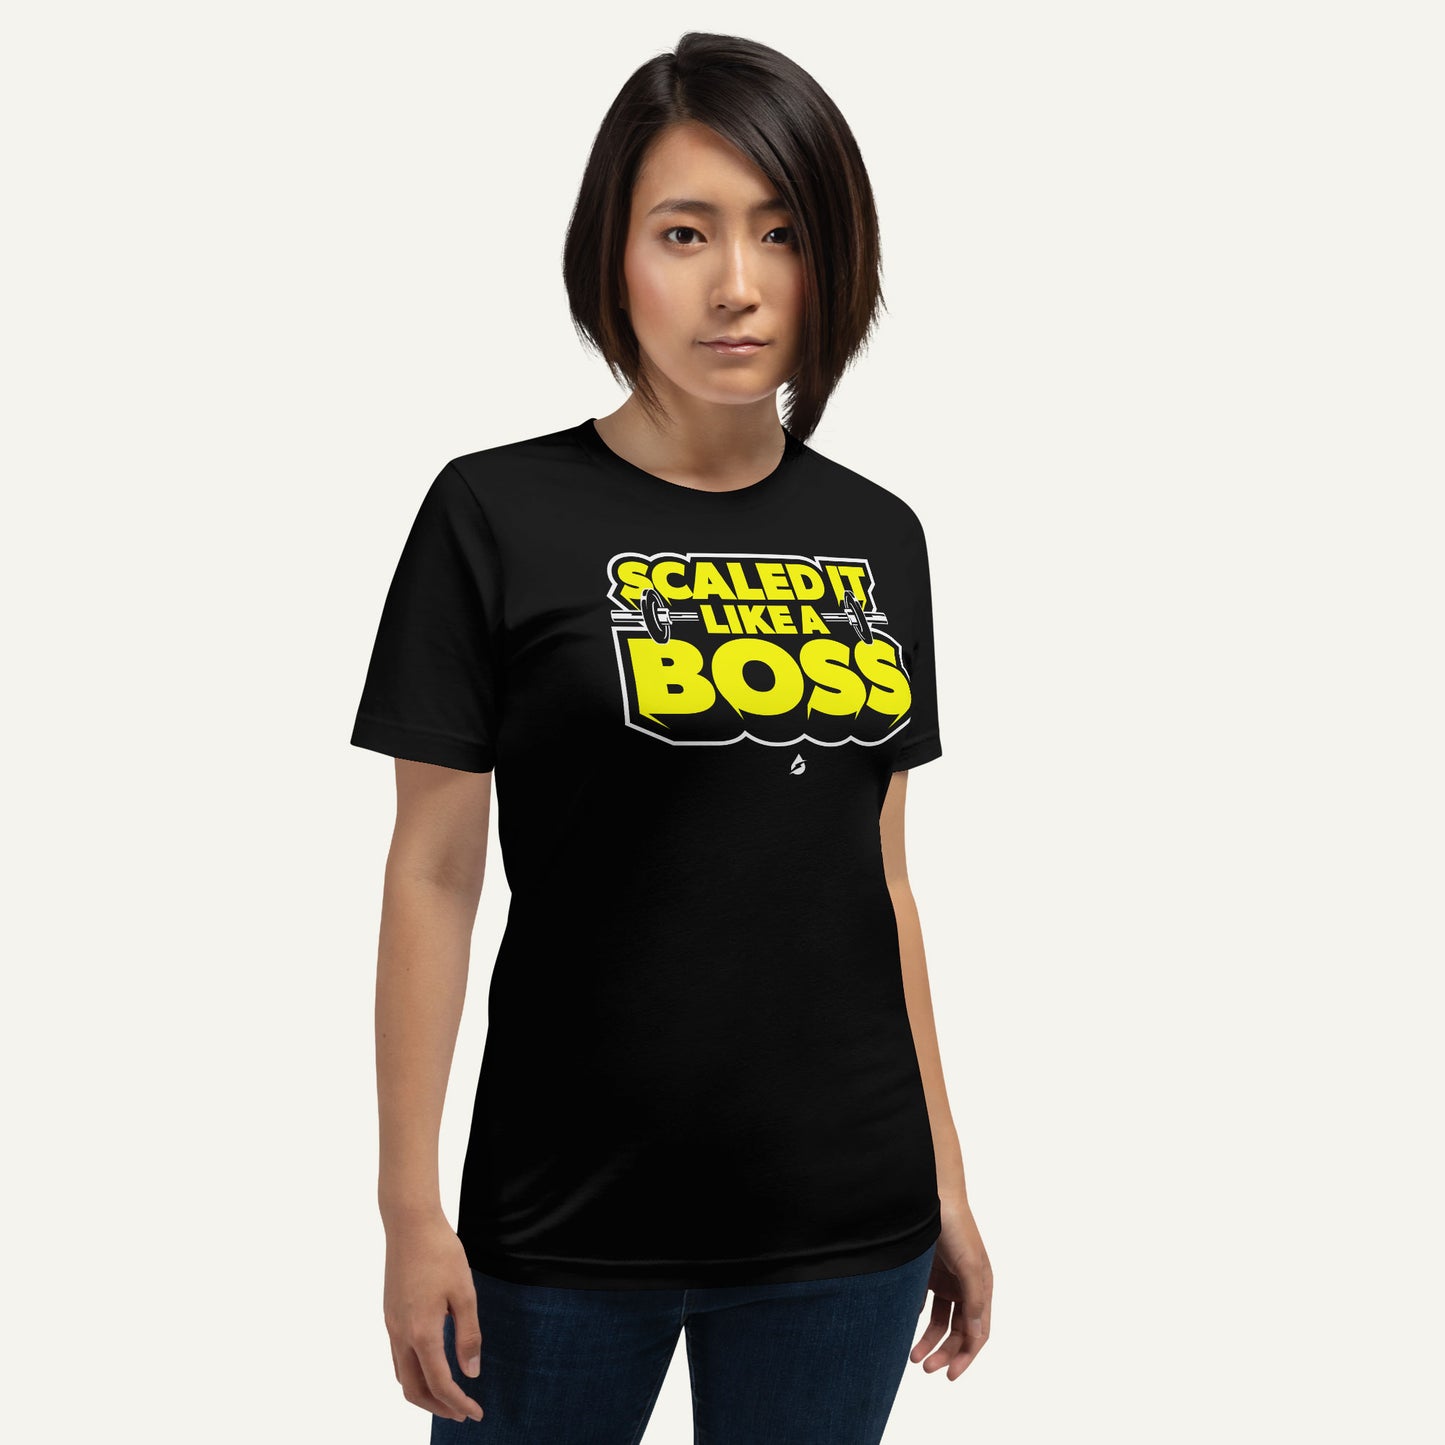 Scaled It Like A Boss Men’s Standard T-Shirt